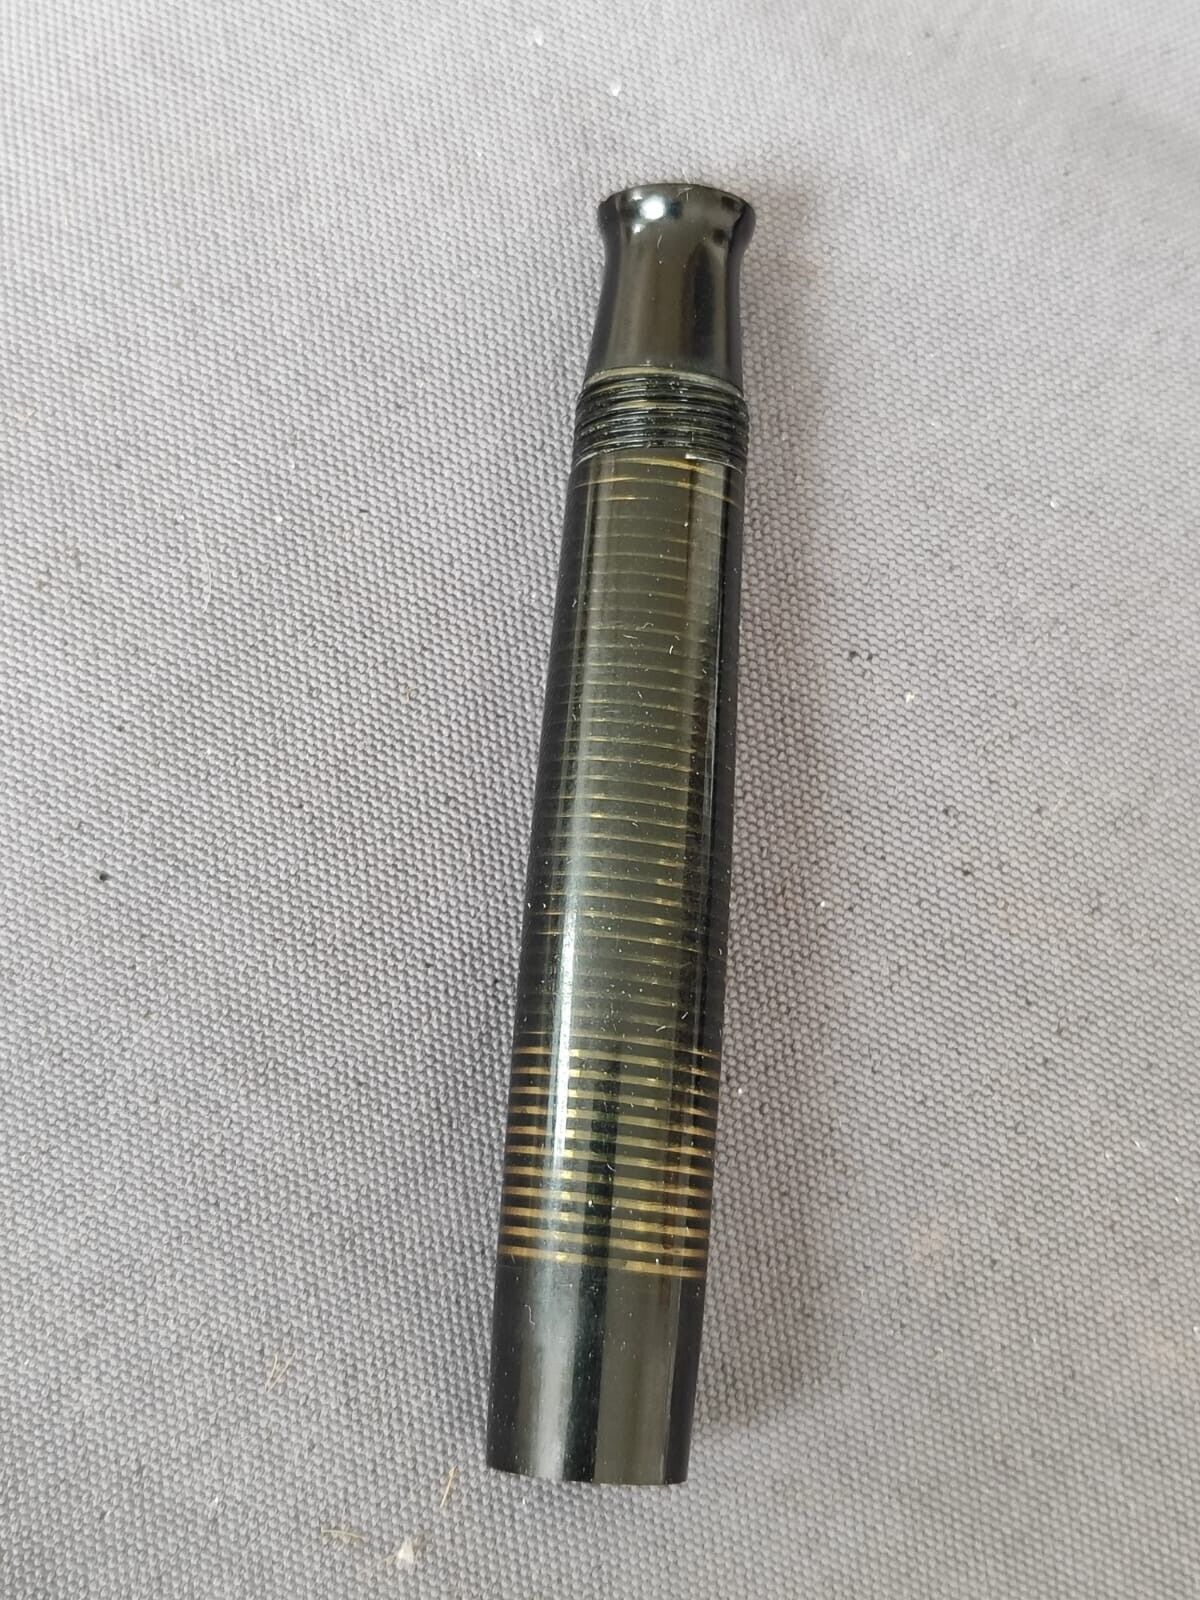 PARKER VACUMATIC 1937 Brown/Black Fountain Pen,Parts Barrel Body Pen Made in USA